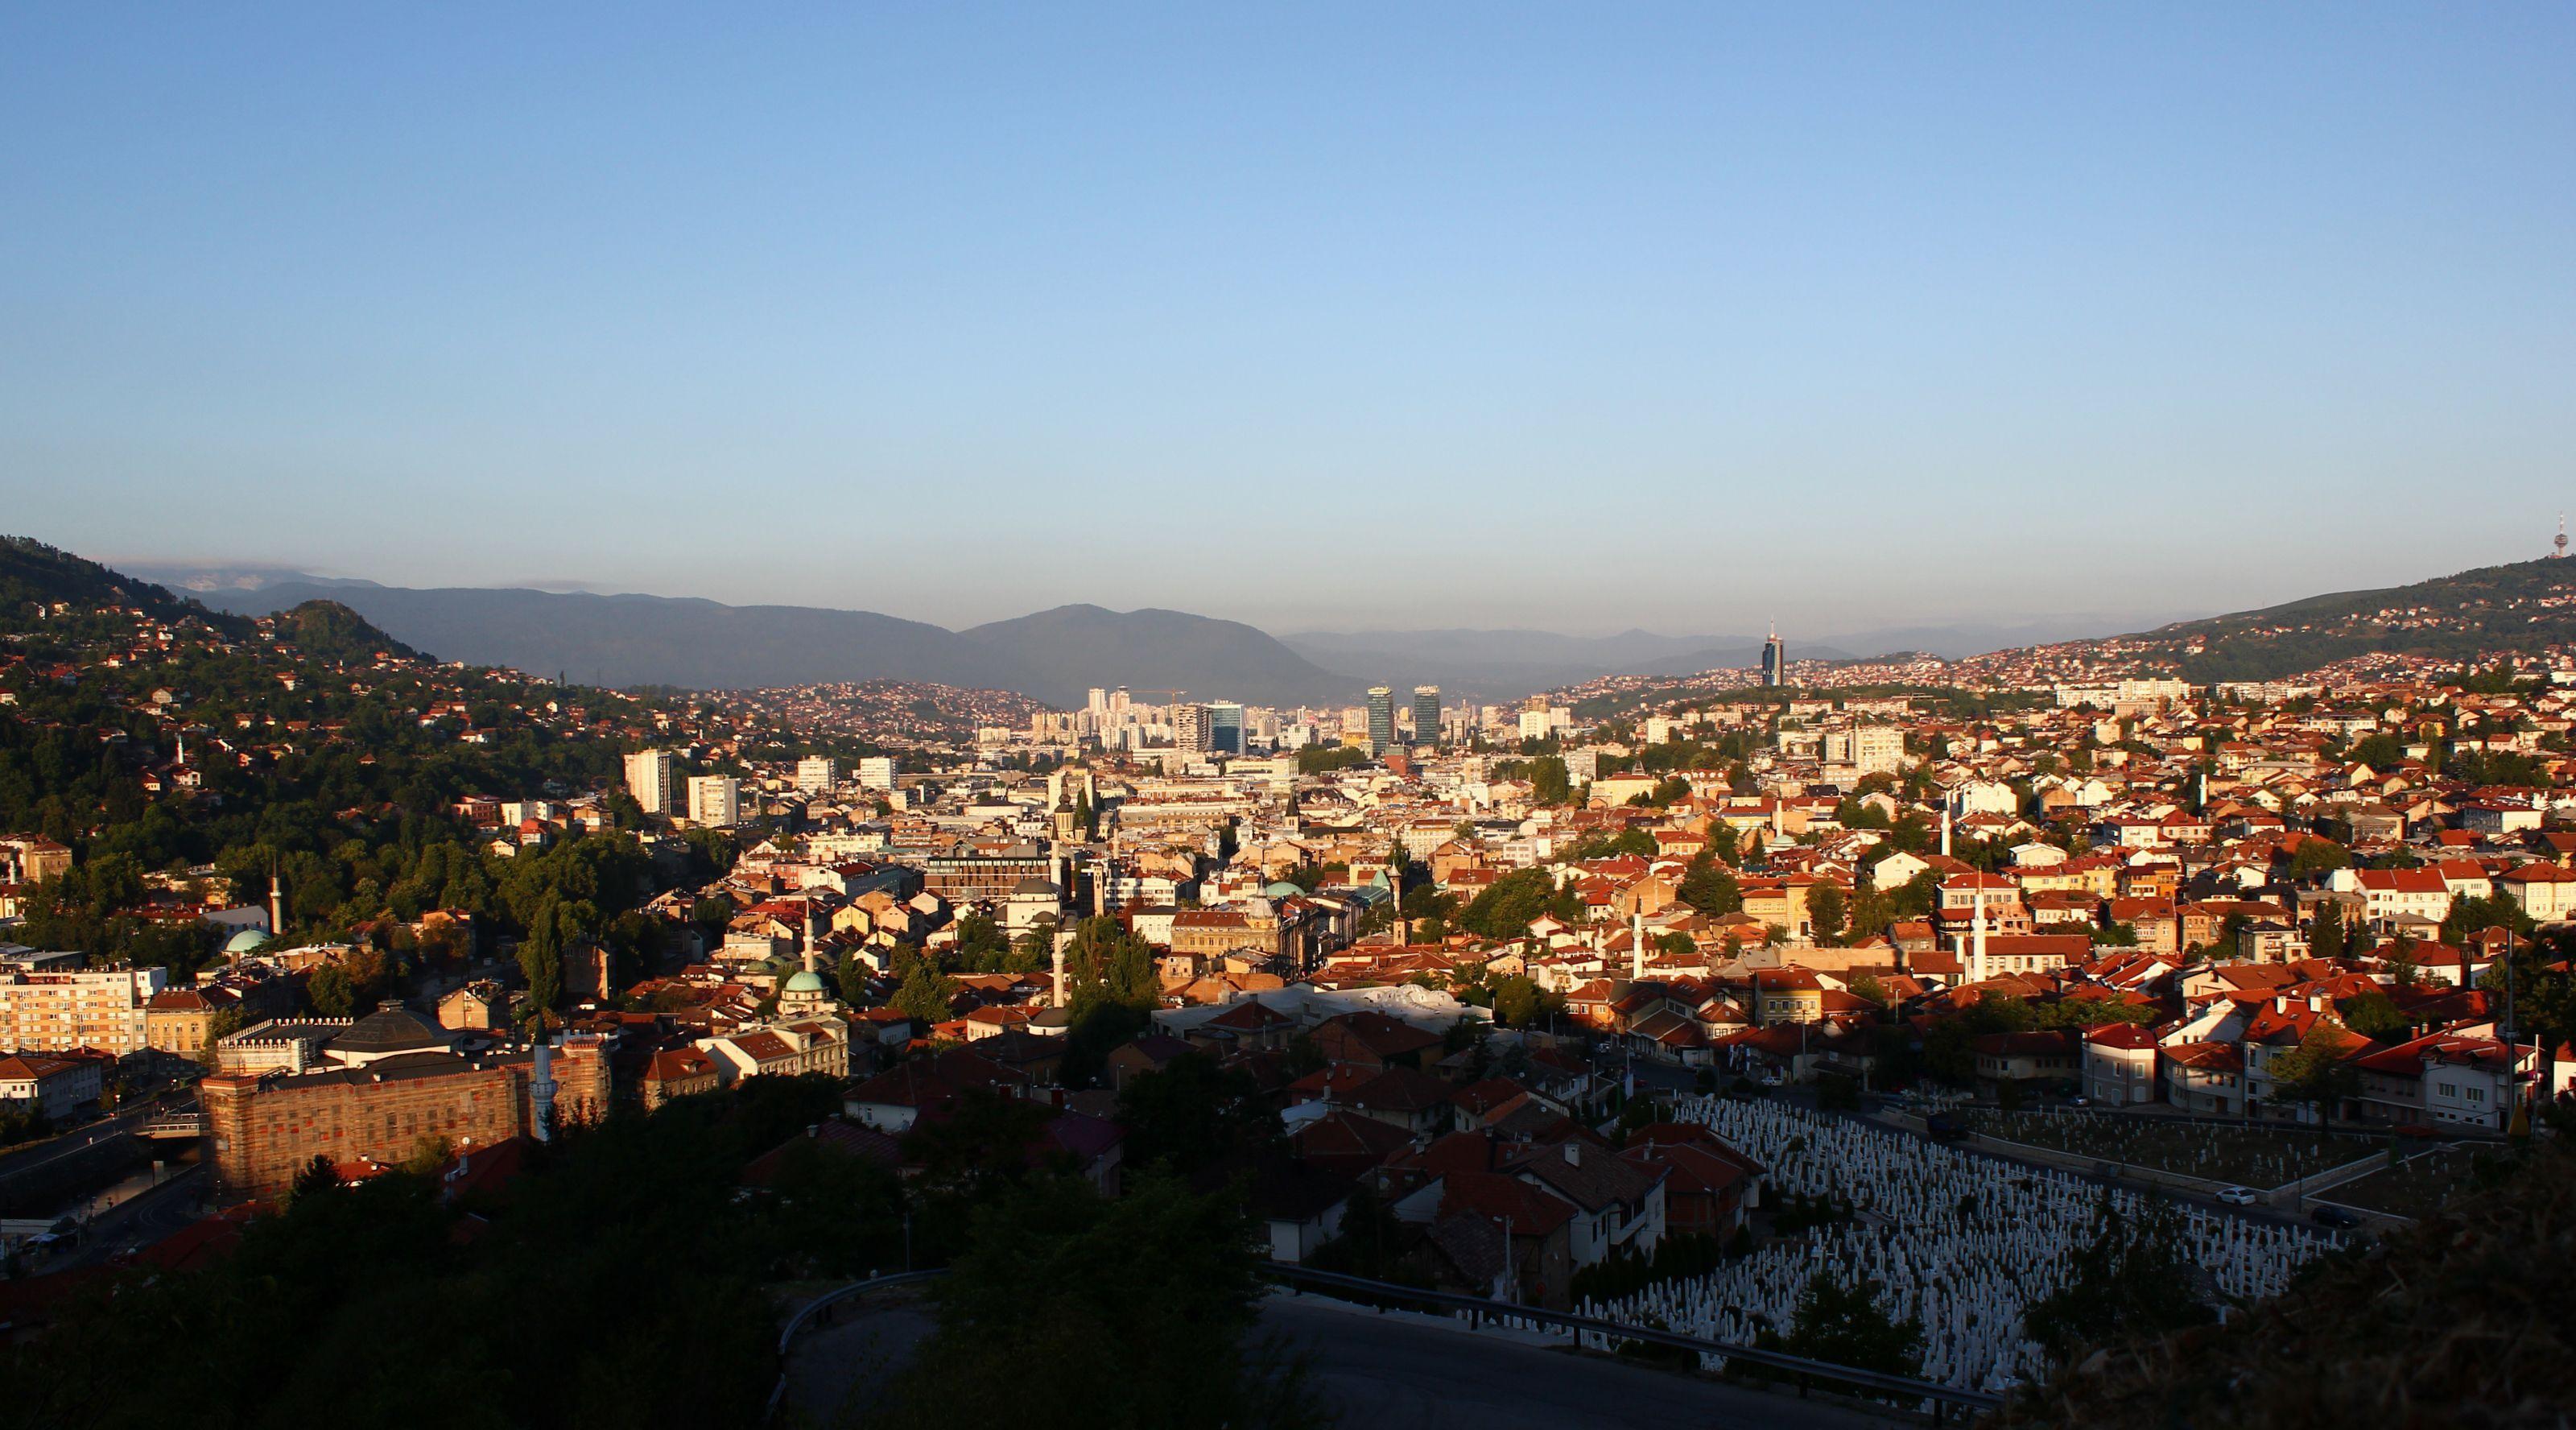 Sarajevo Wallpaper Image Photo Picture Background